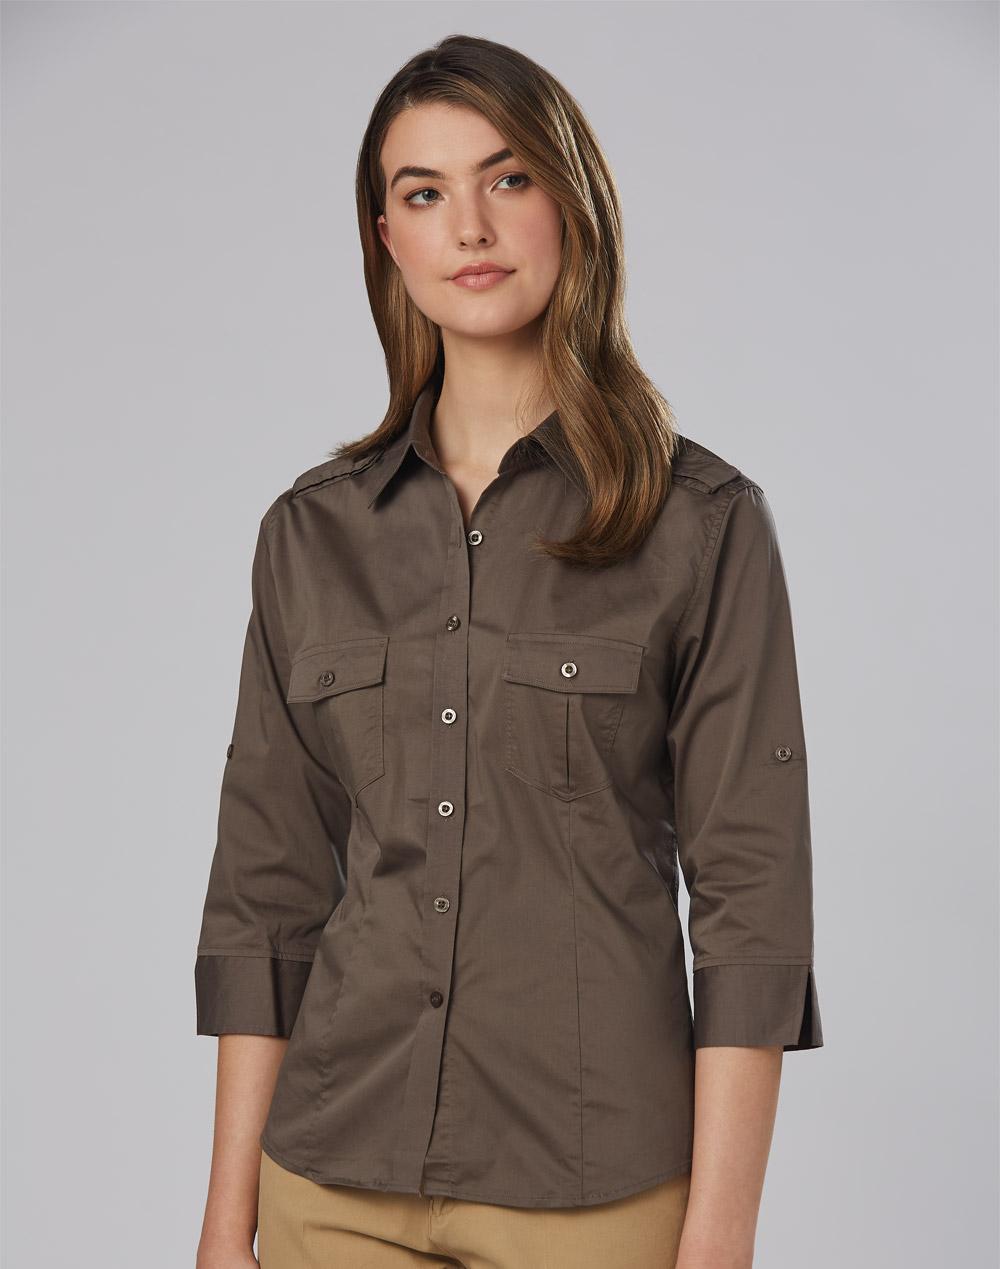 Benchmark M8913 Women's 3/4 Sleeve Military Shirt